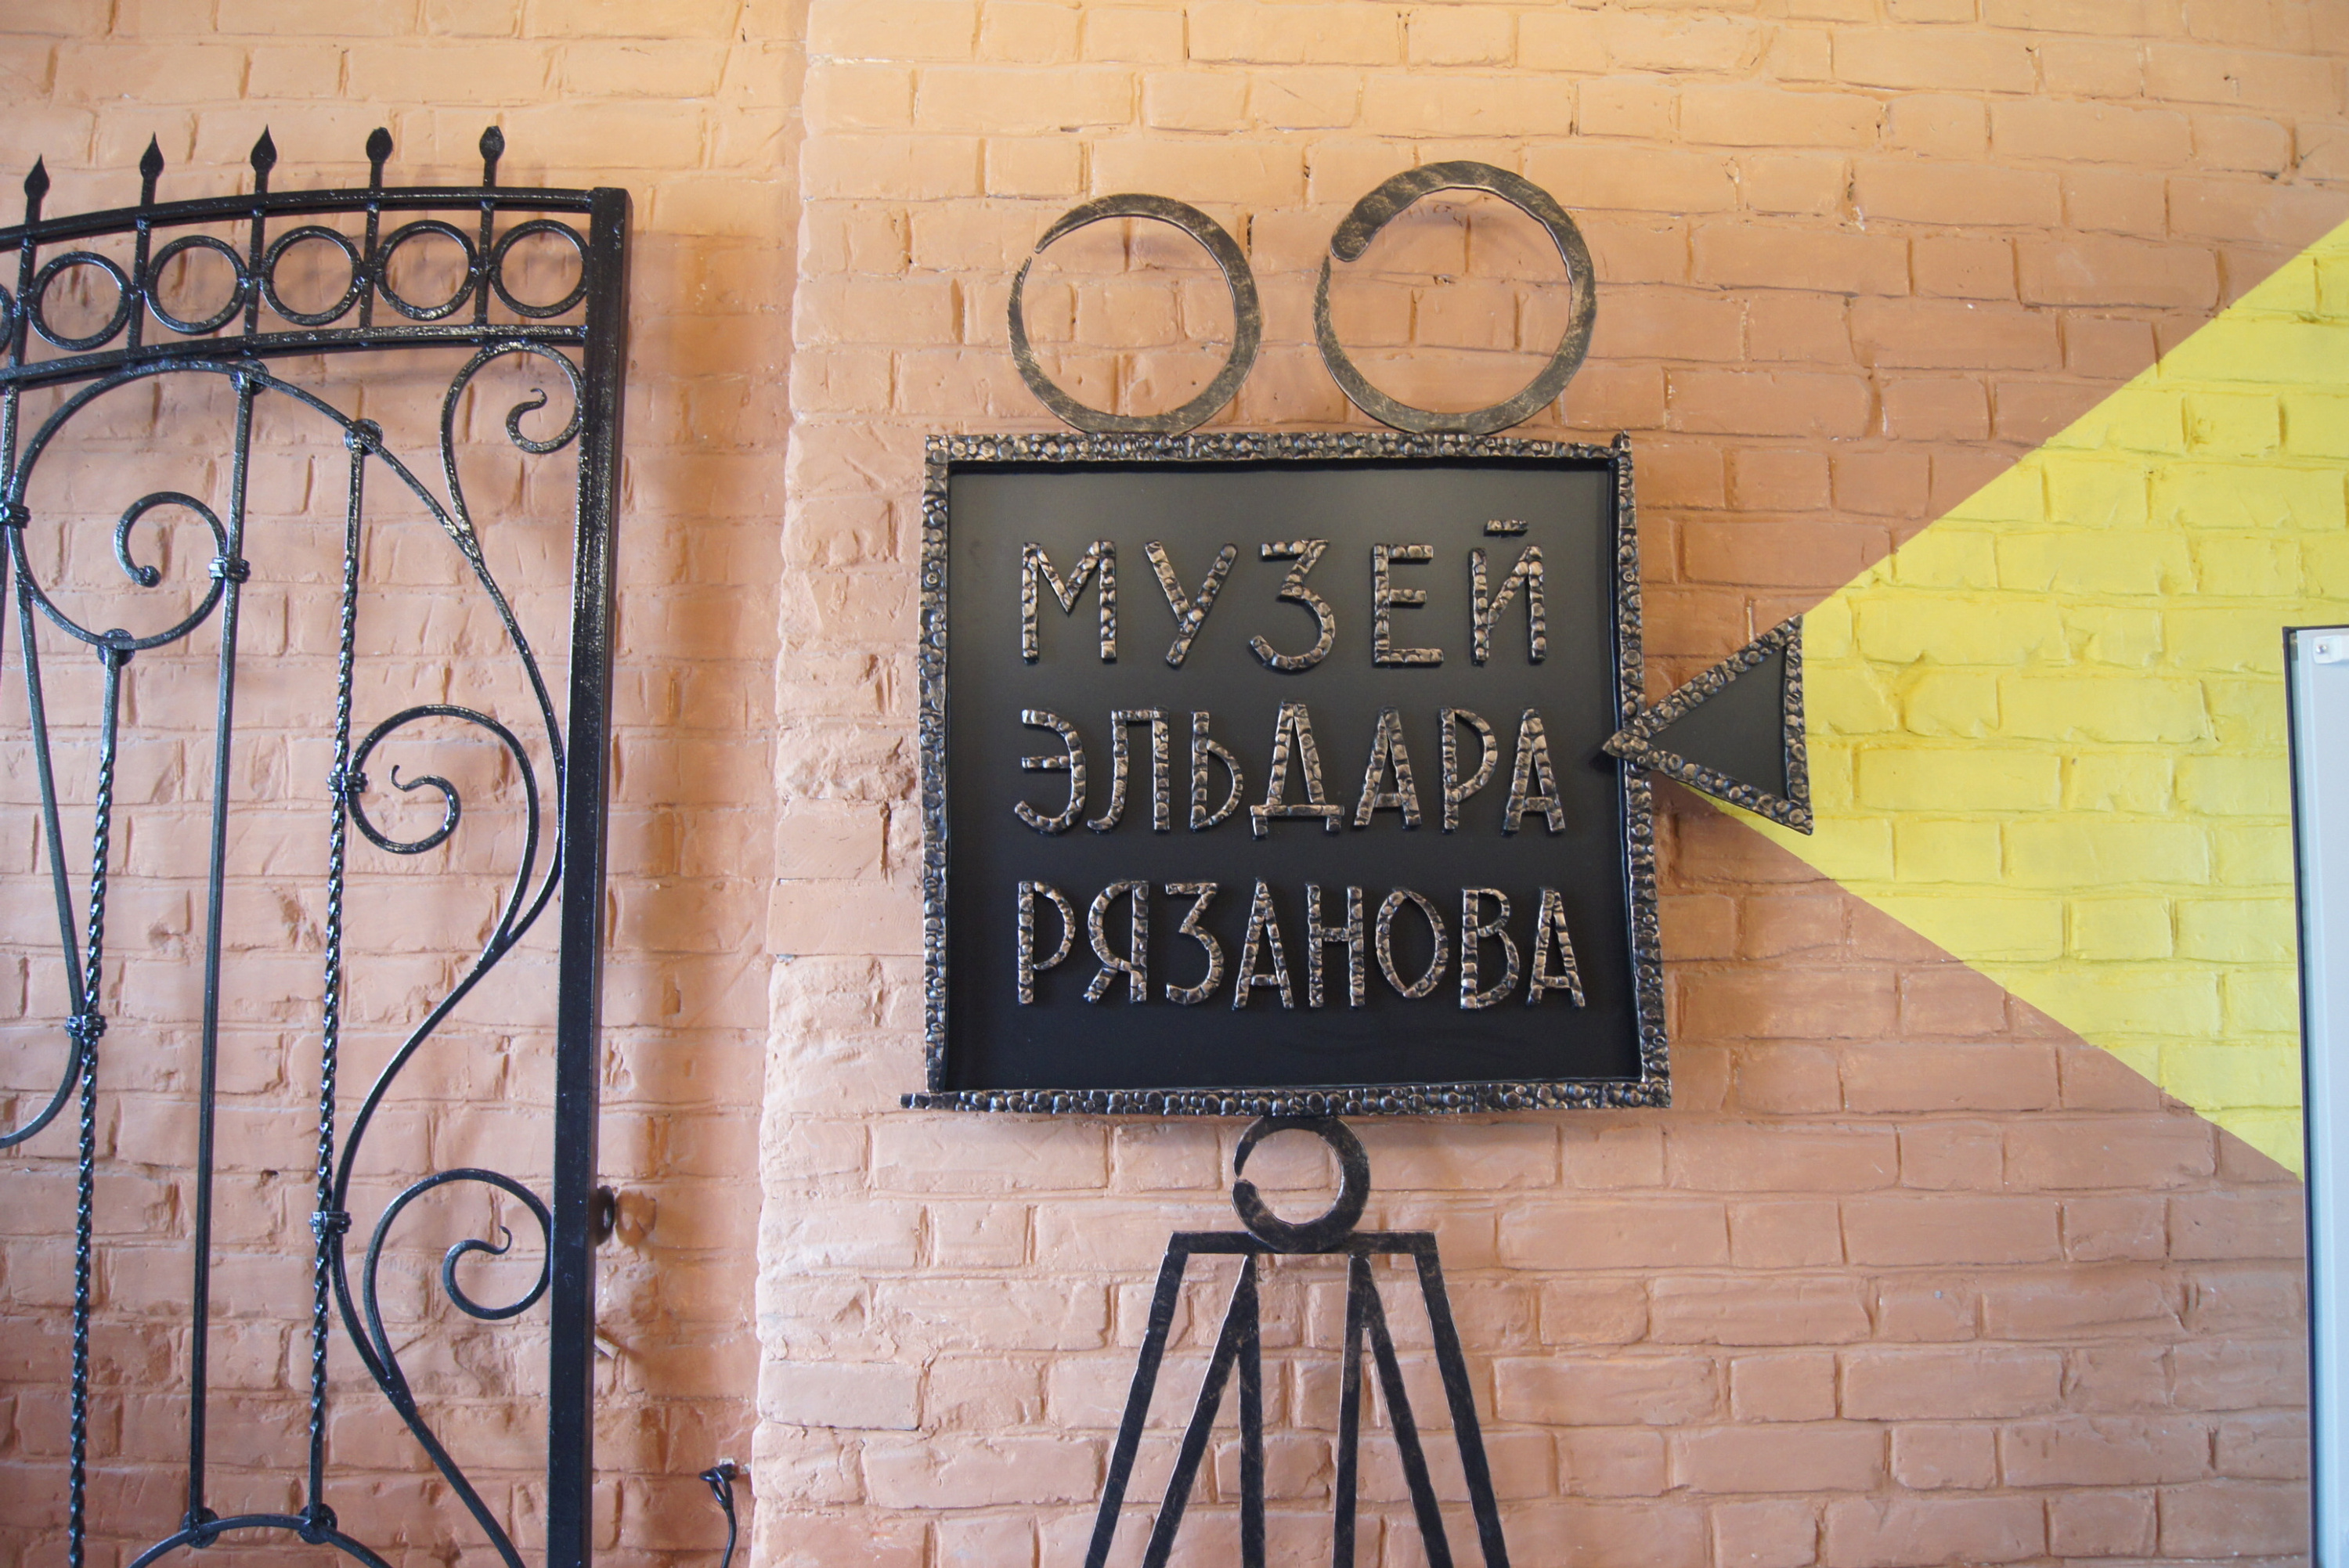 Музей Рязанова в Самаре открыл свои двери 19 мая 2018 года